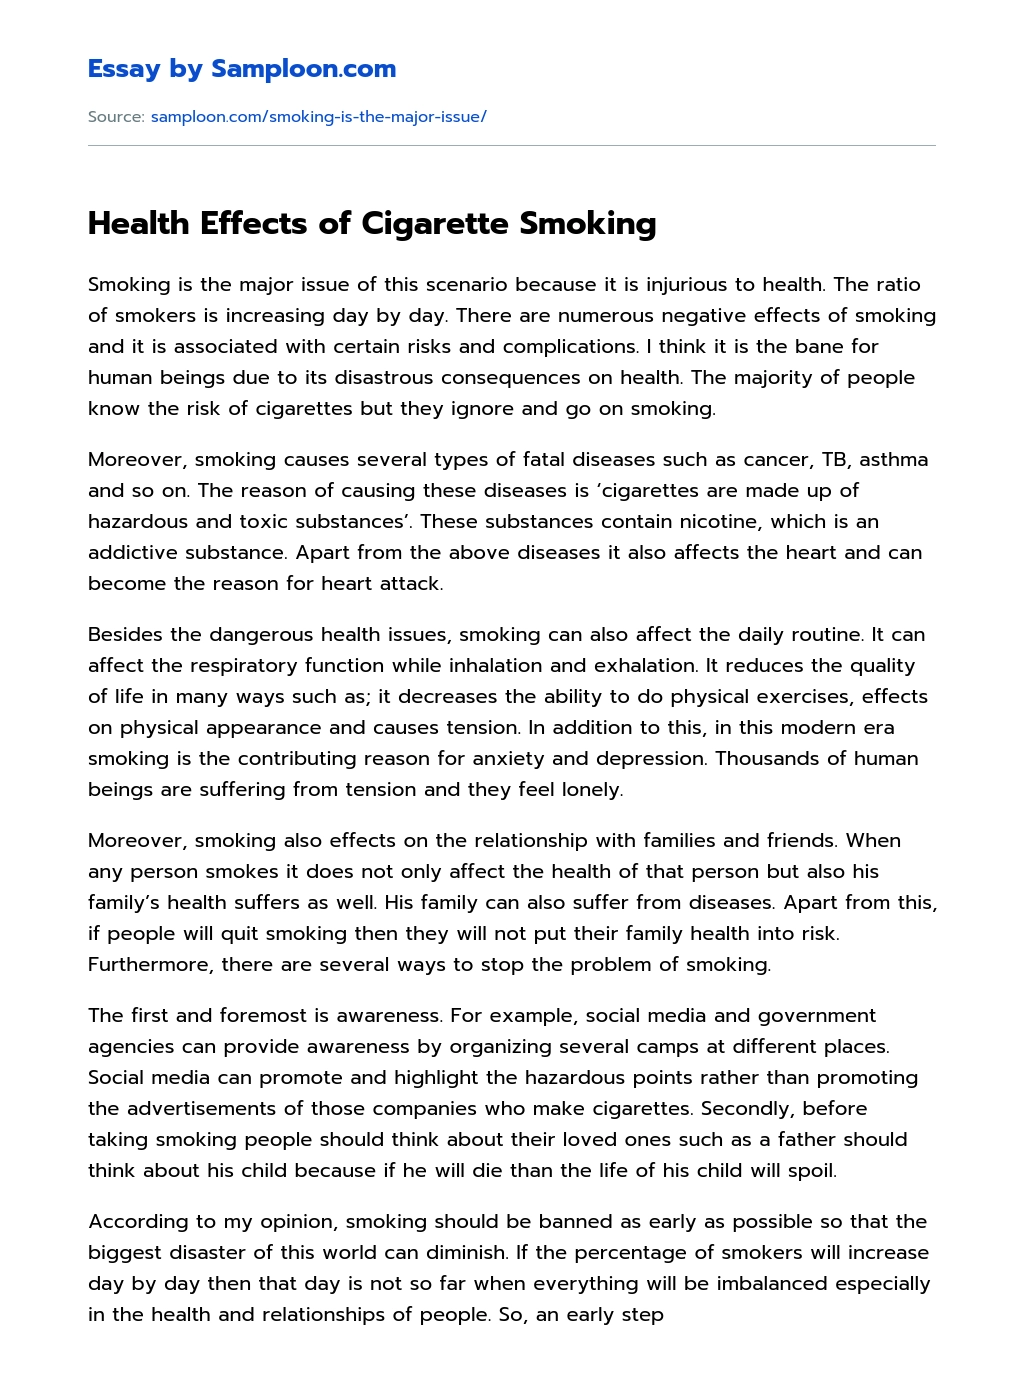 informative essay for smoking